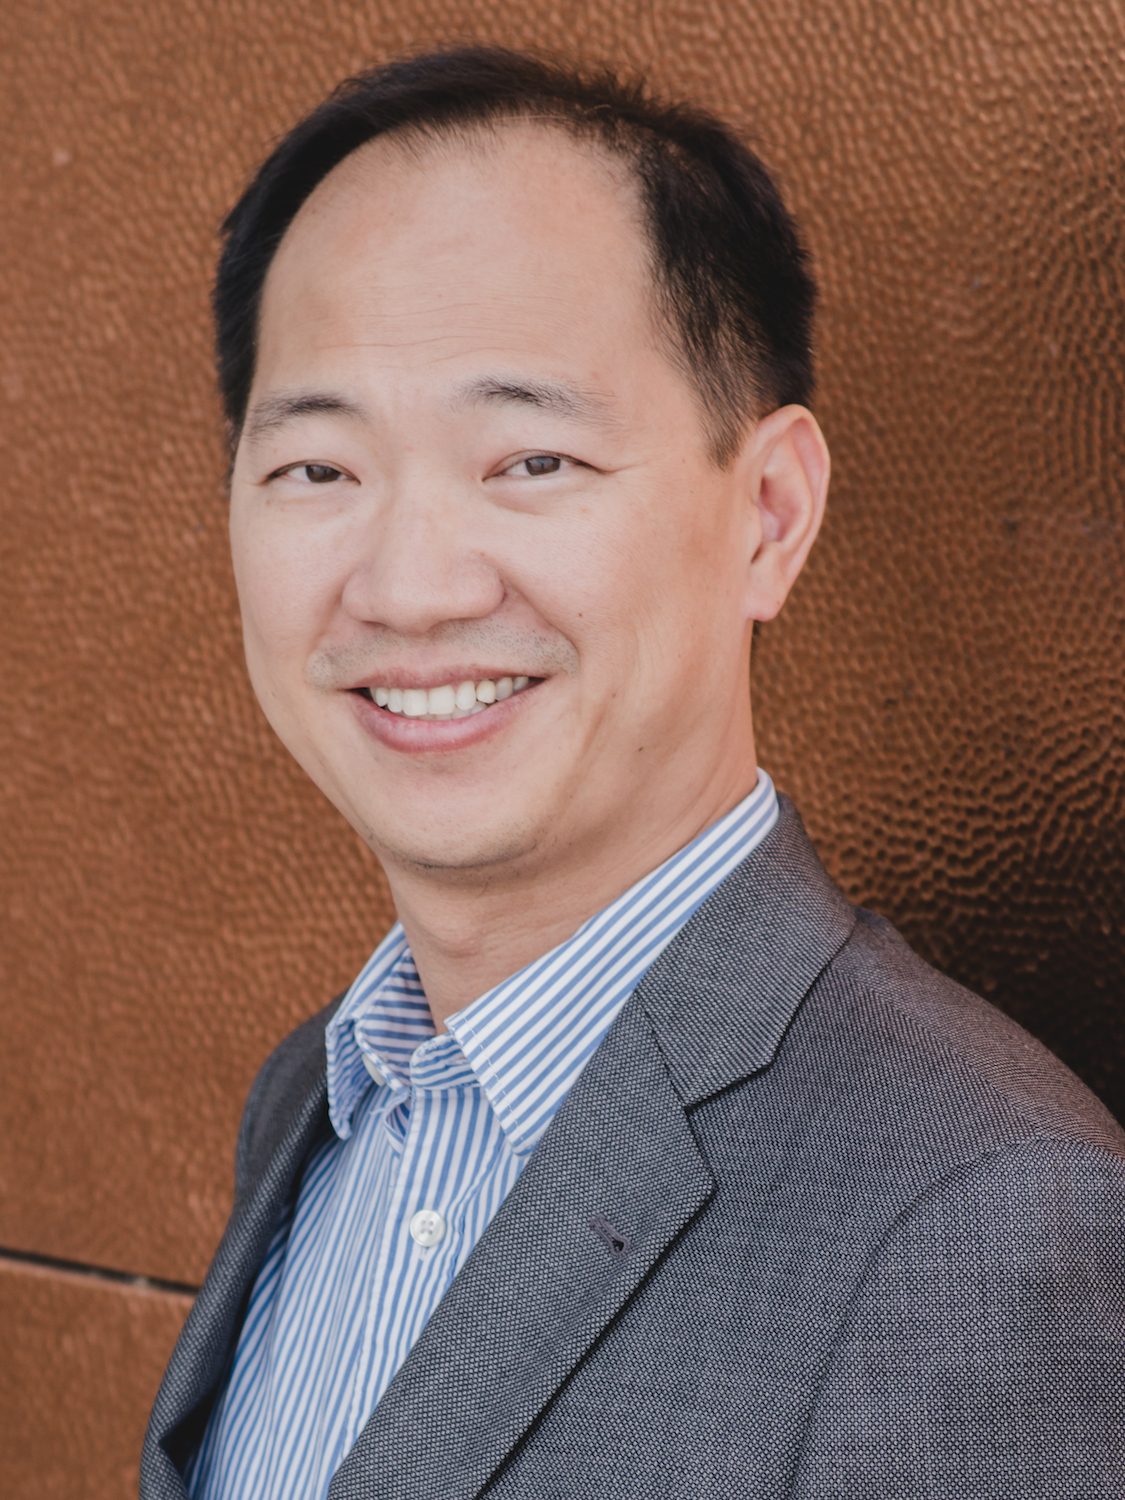 Joseph Huang - Secretary on the Board of Directors at Aeeiee